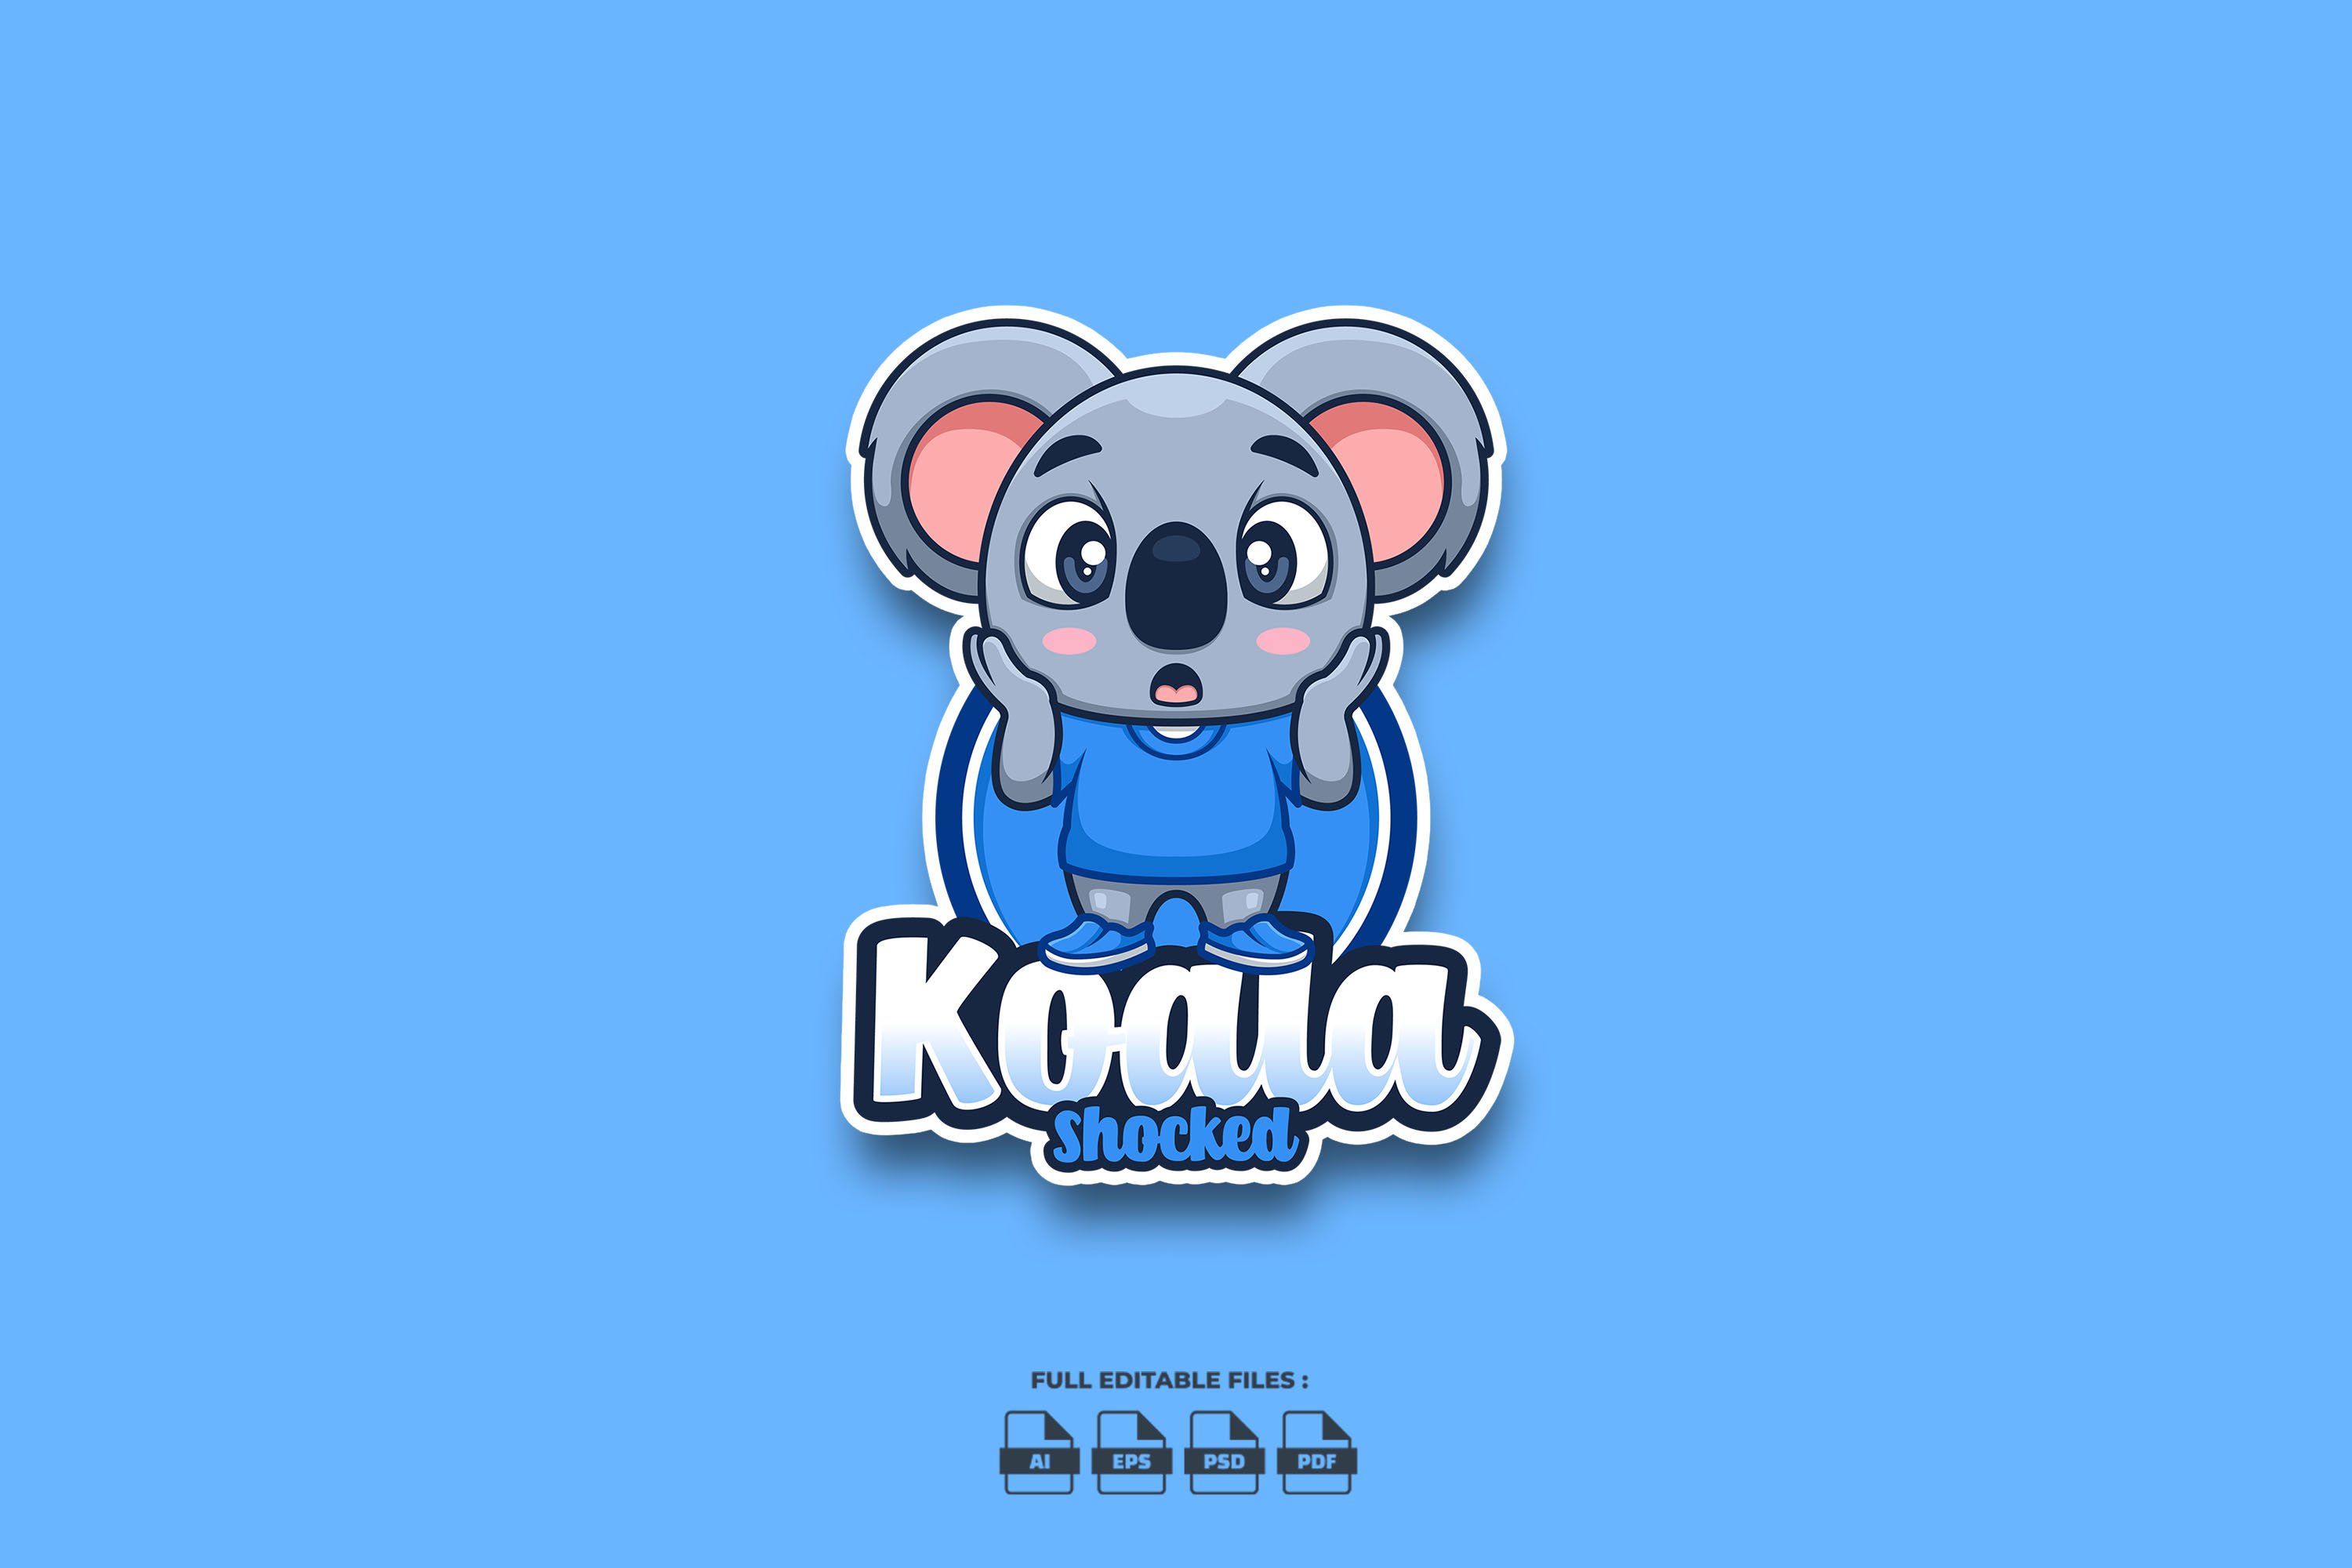 Shocked Koala Cartoon Logo cover image.